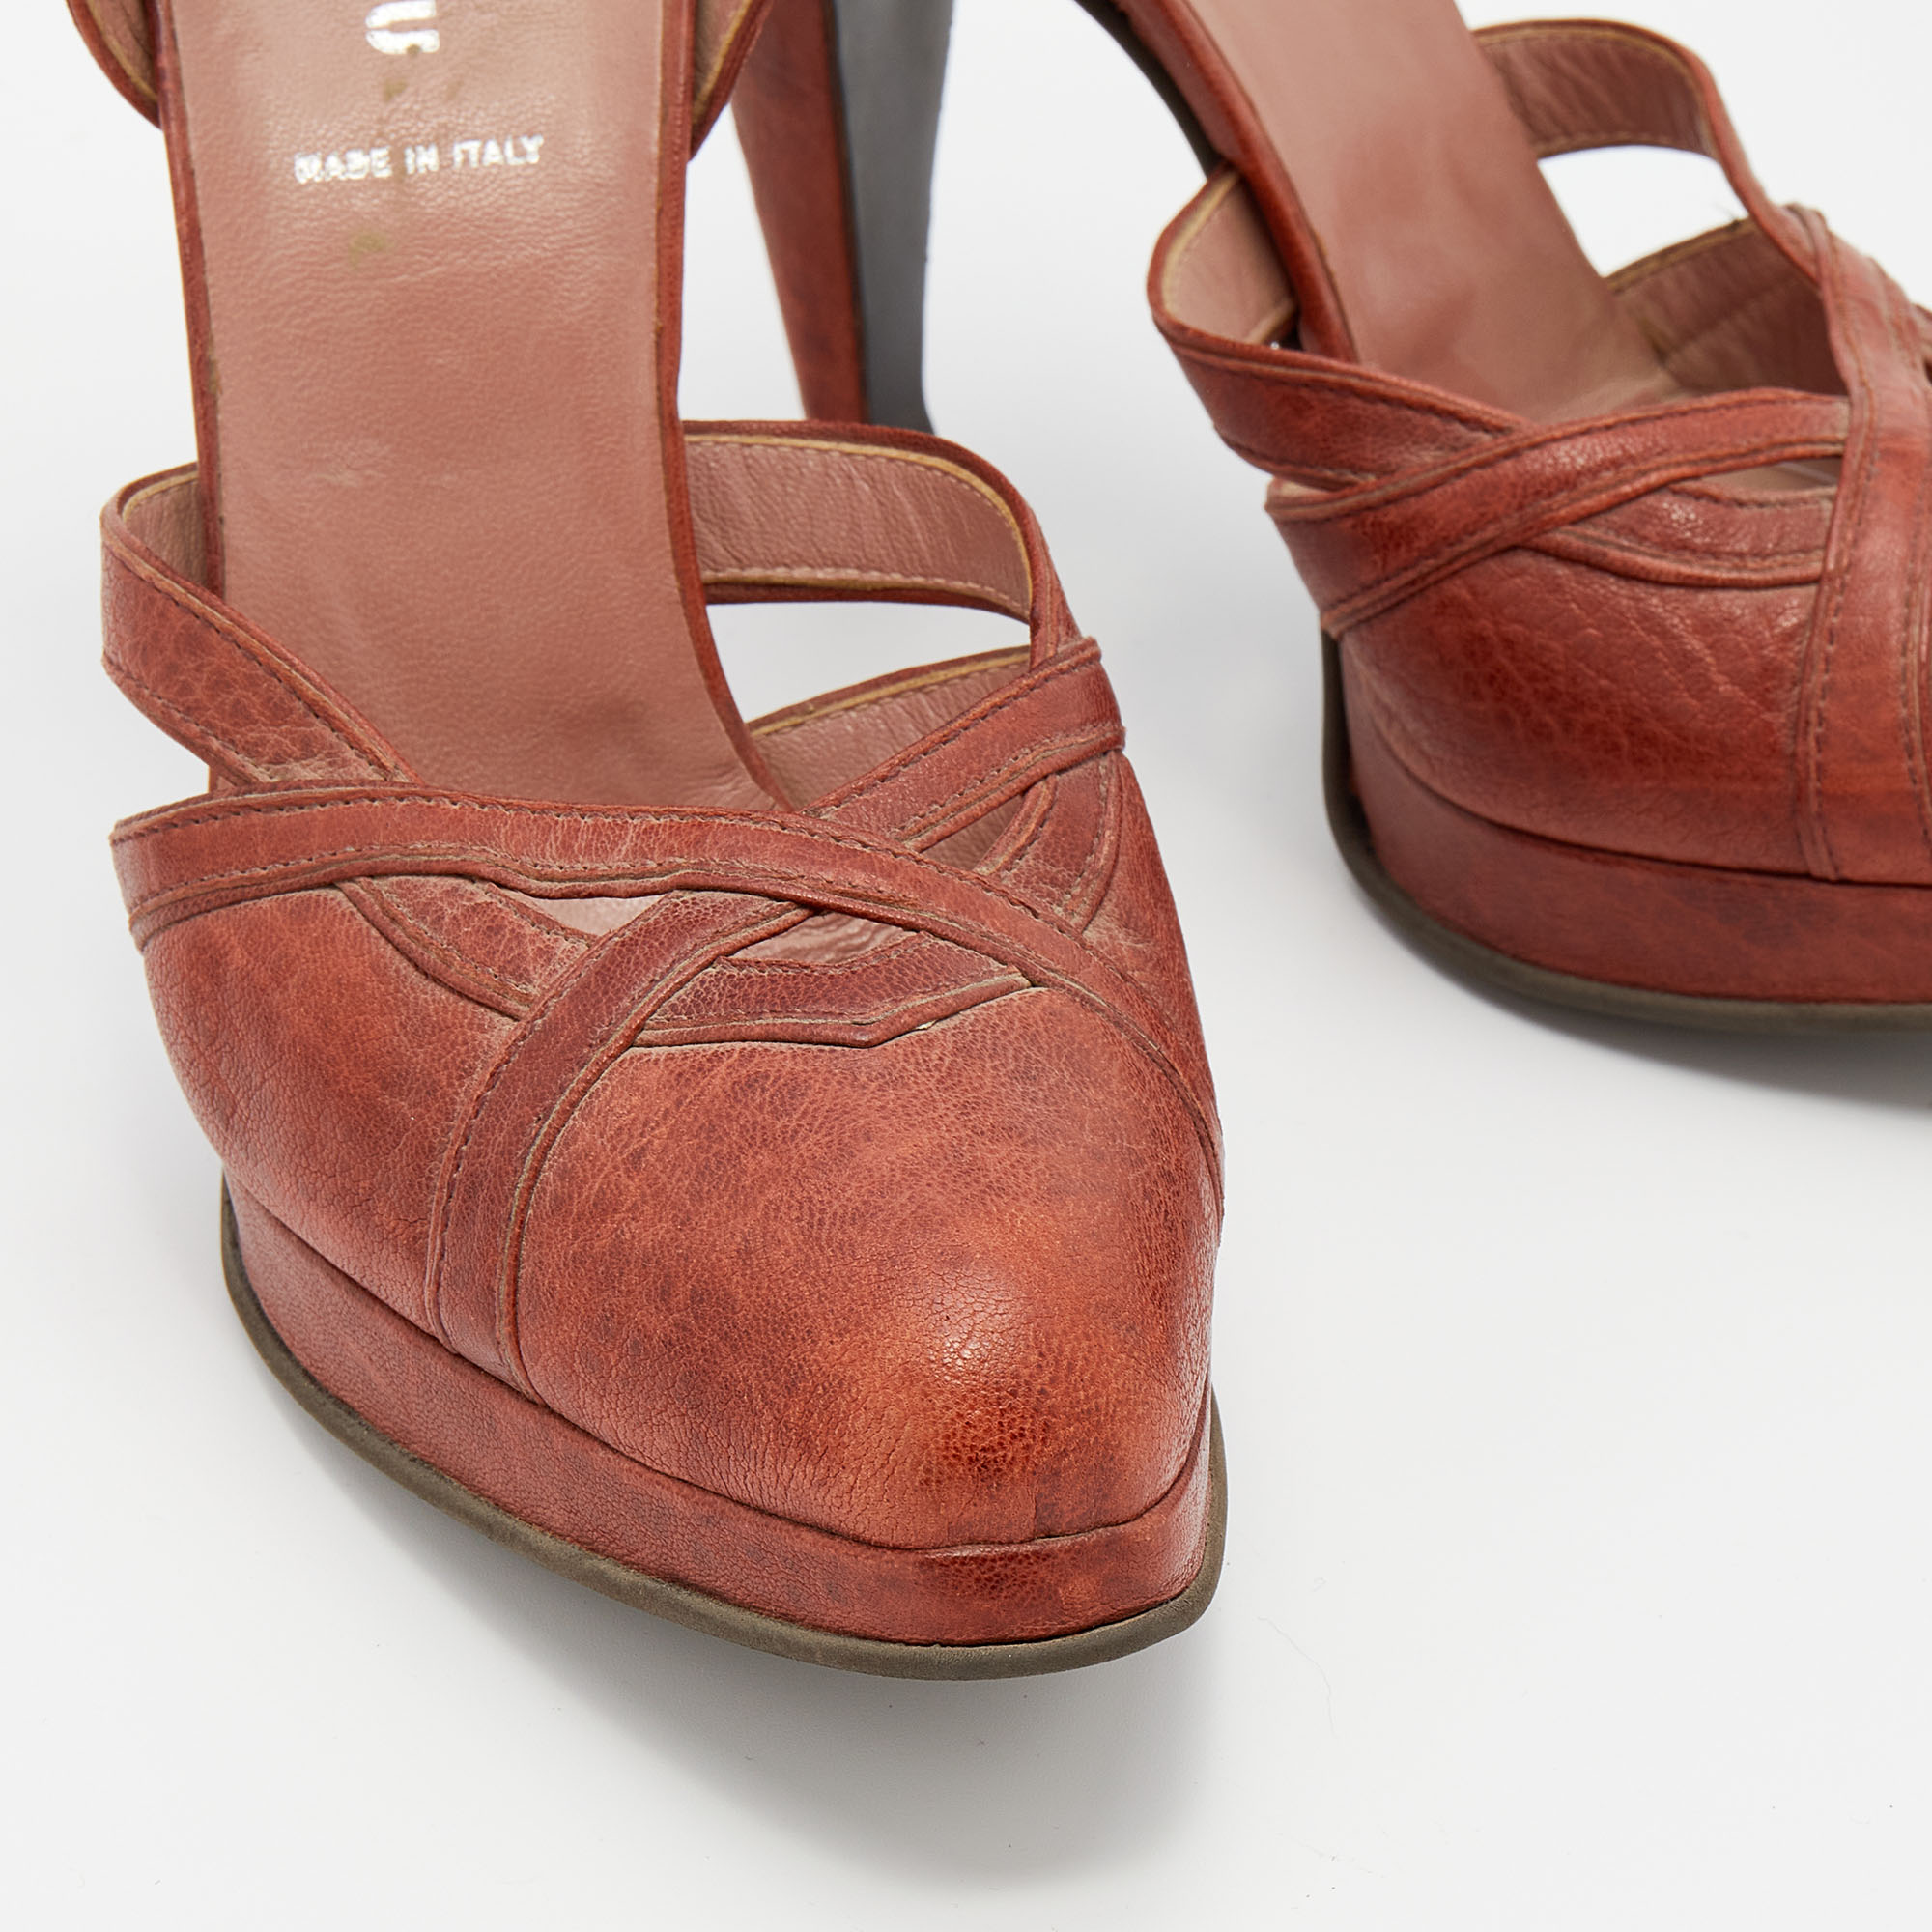 Miu Miu Burnt Orange Leather Ankle Strap Platform Sandals Size 40